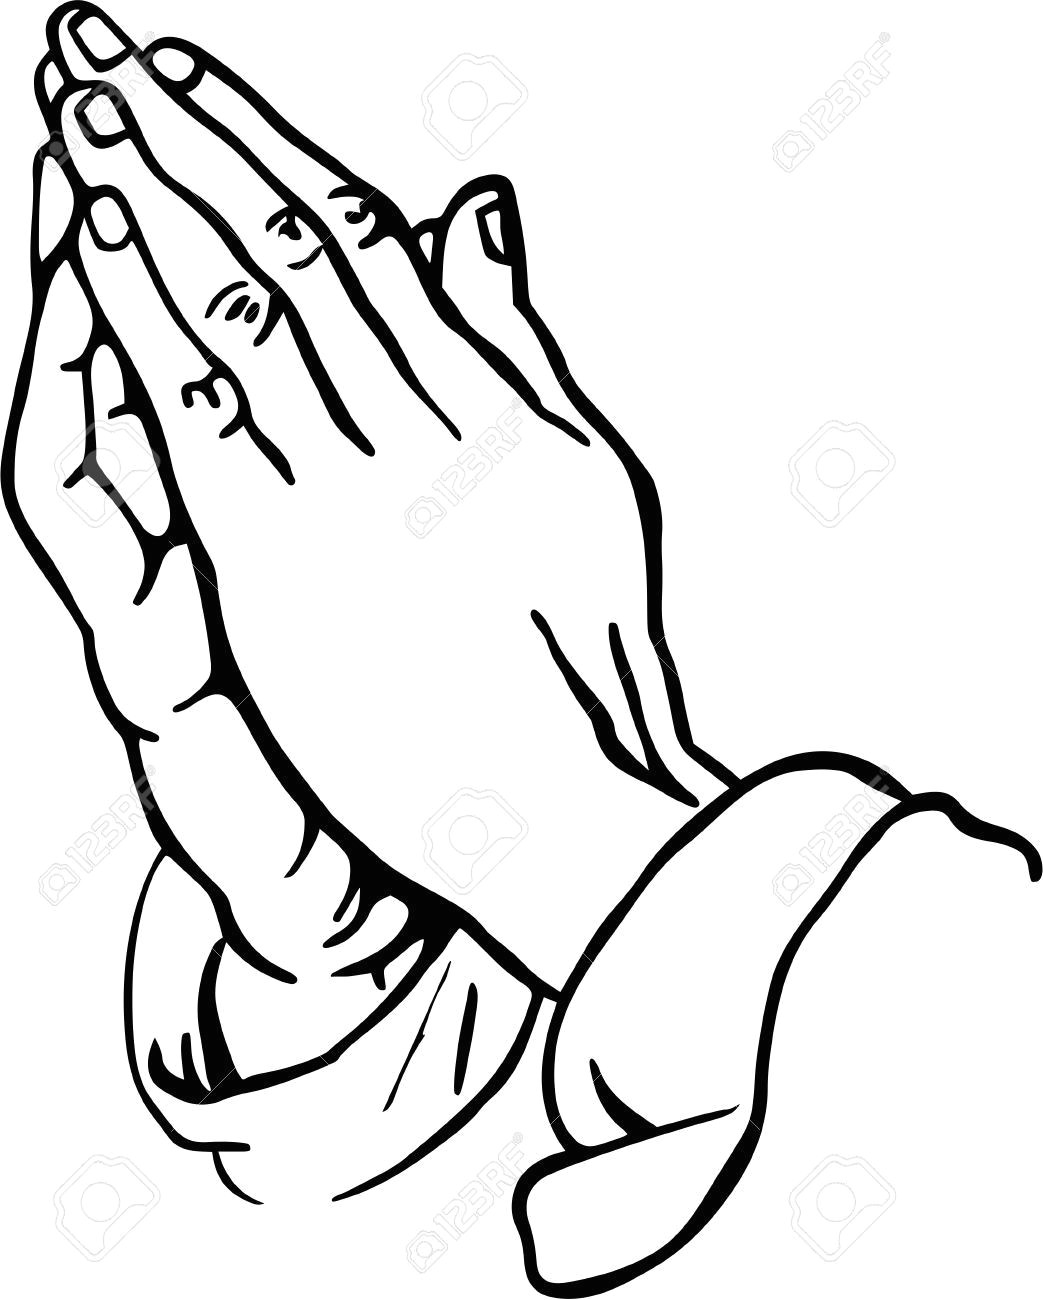 Drawings Of Jesus Hands Praying Hands Clipart Craft Ideas Pinterest Praying Hands